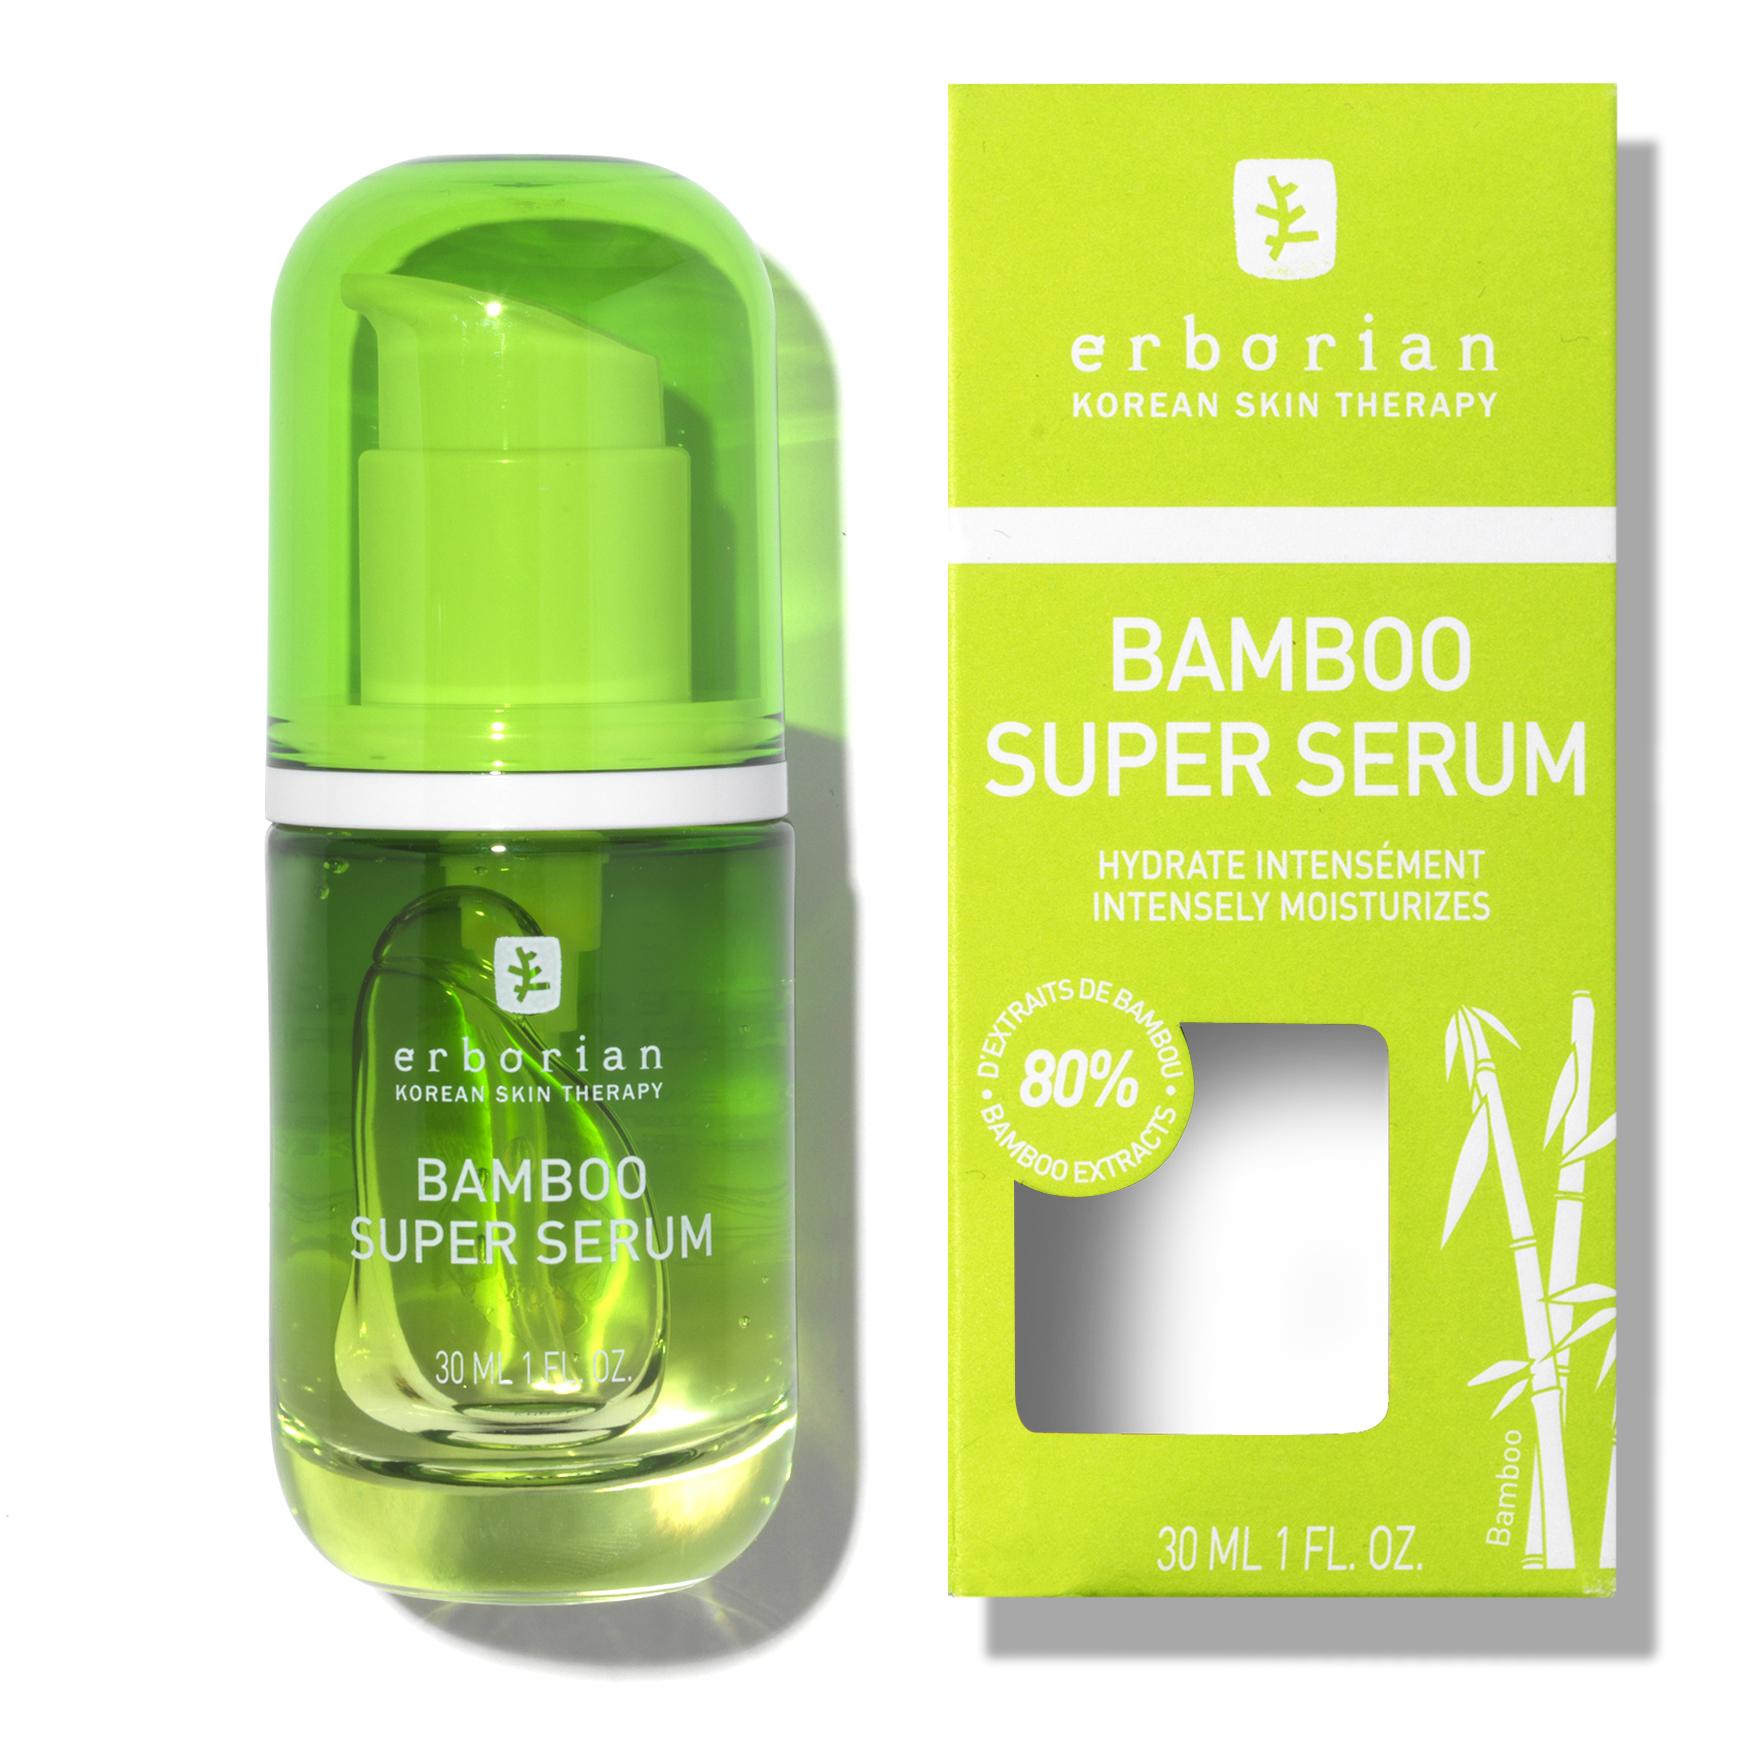 Erborian Bamboo Super Serum | Space NK